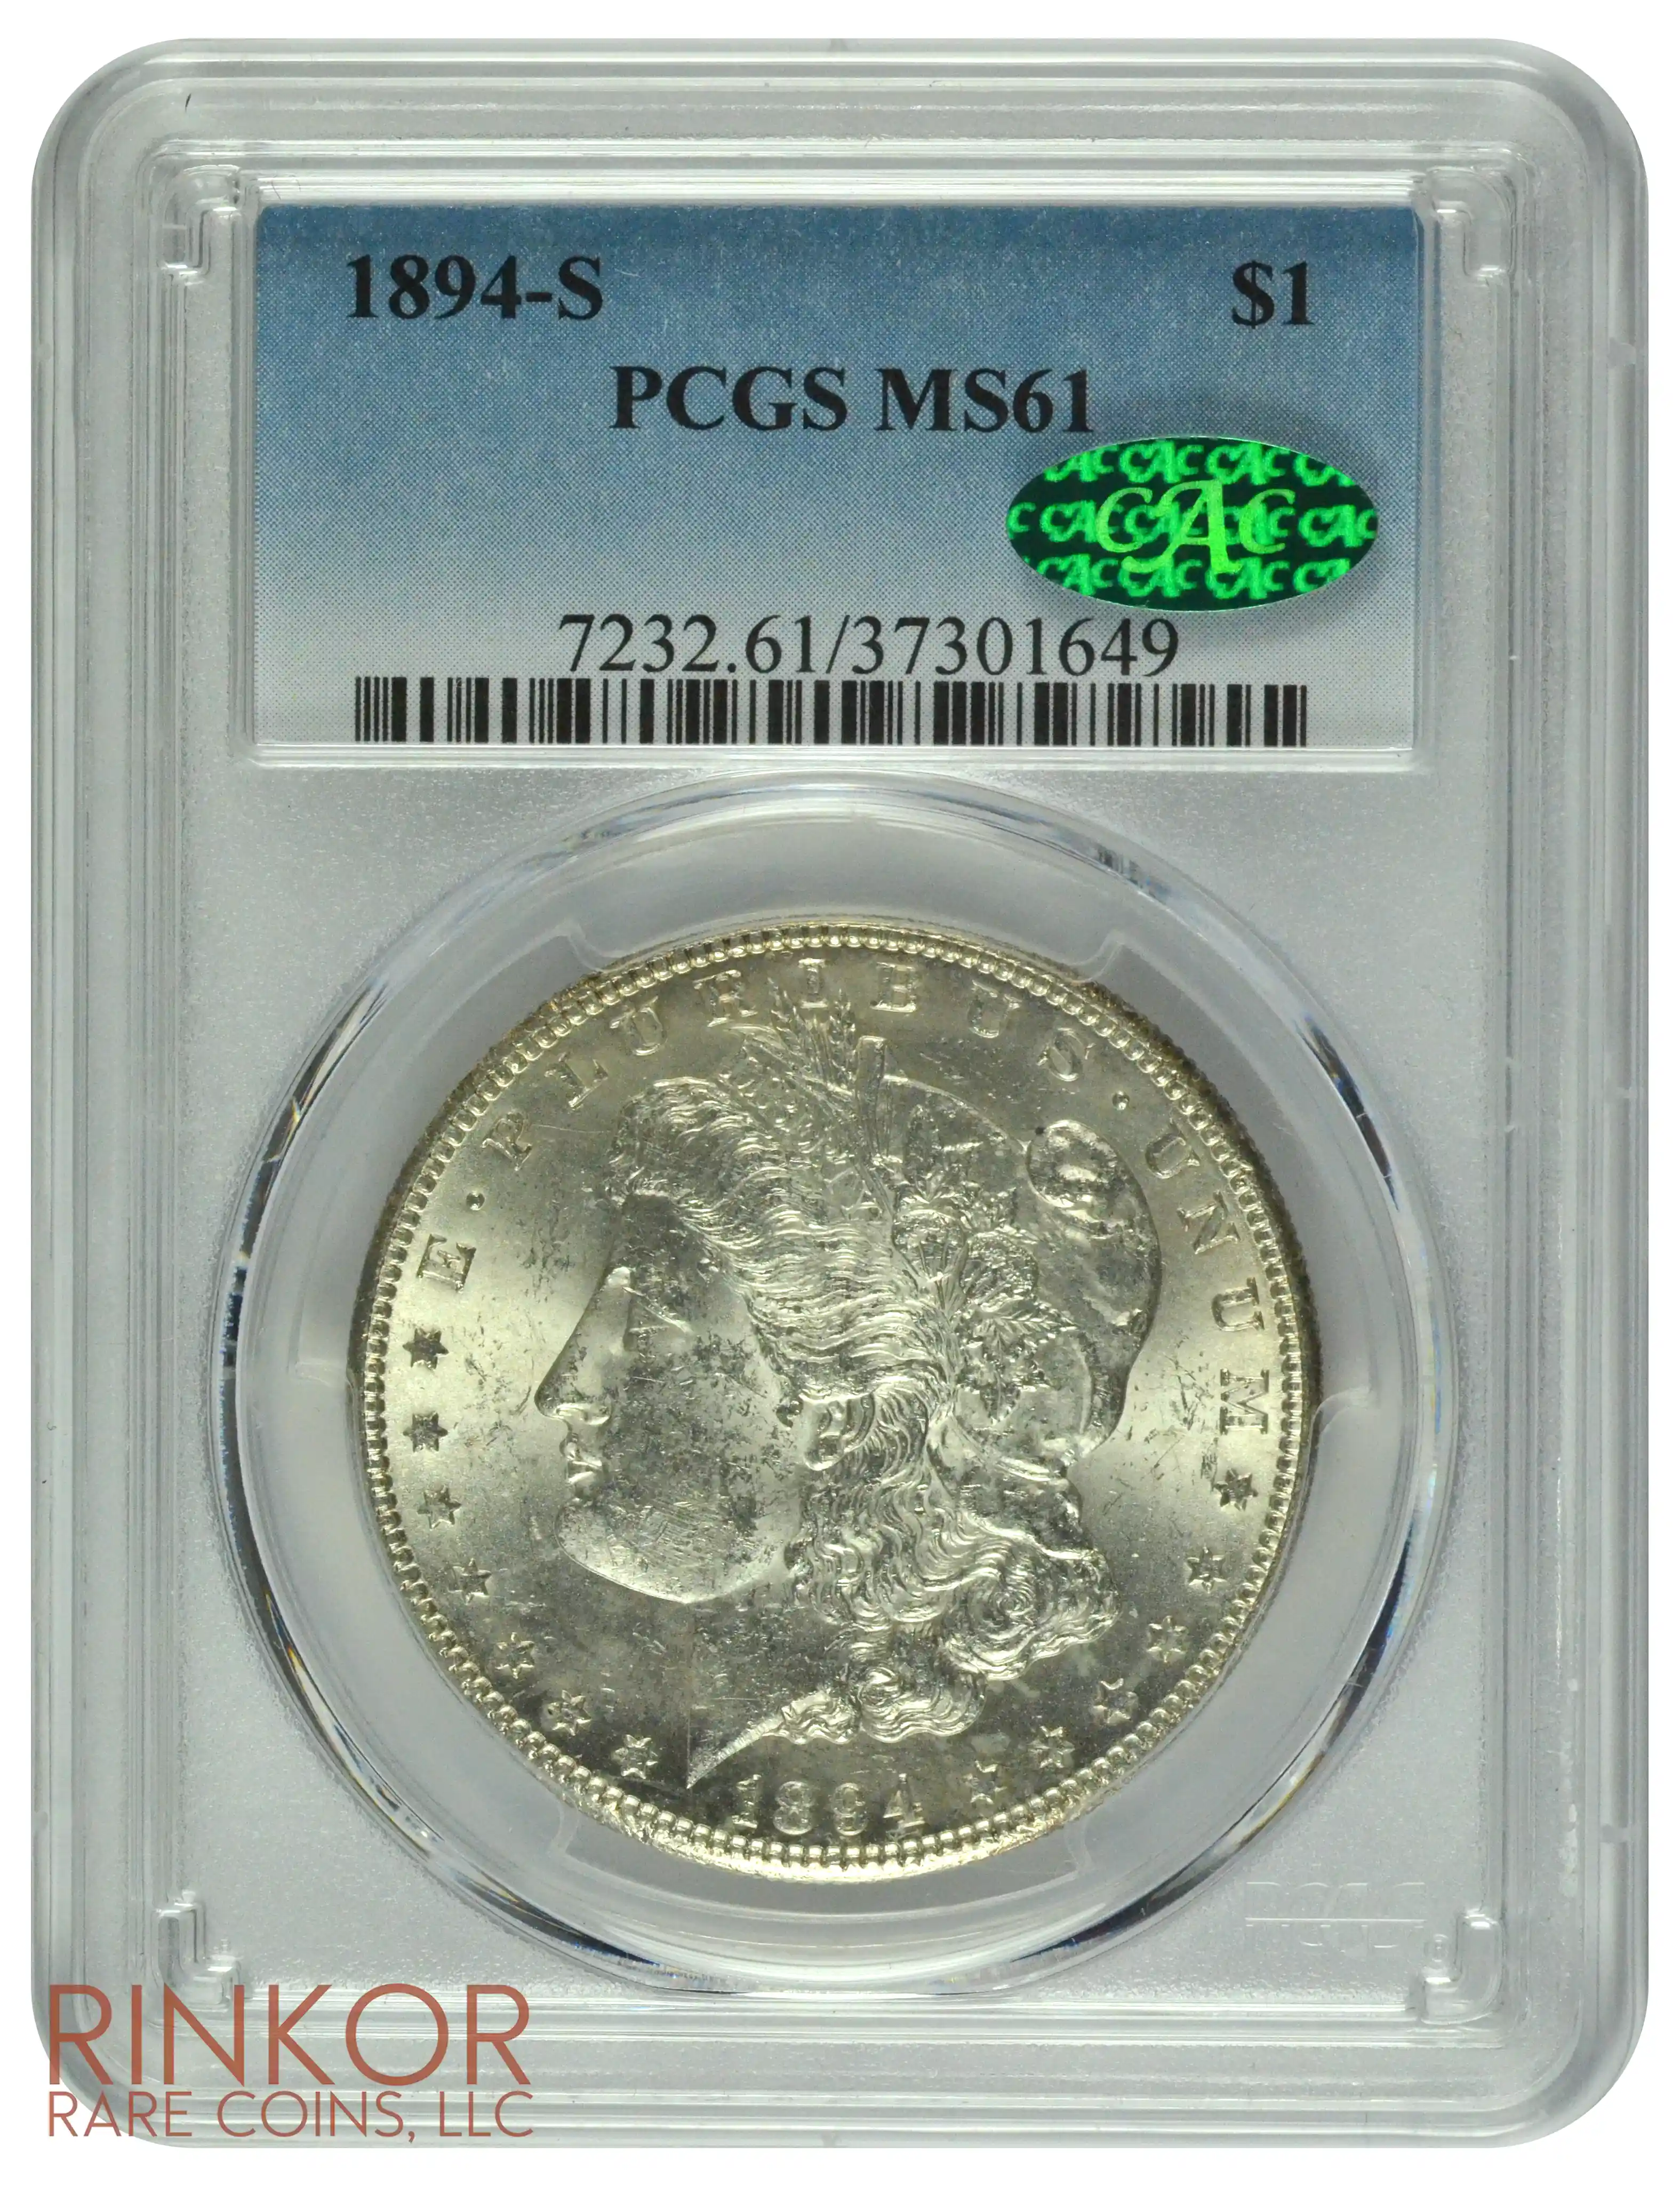 1894-S $1 PCGS MS 61 CAC